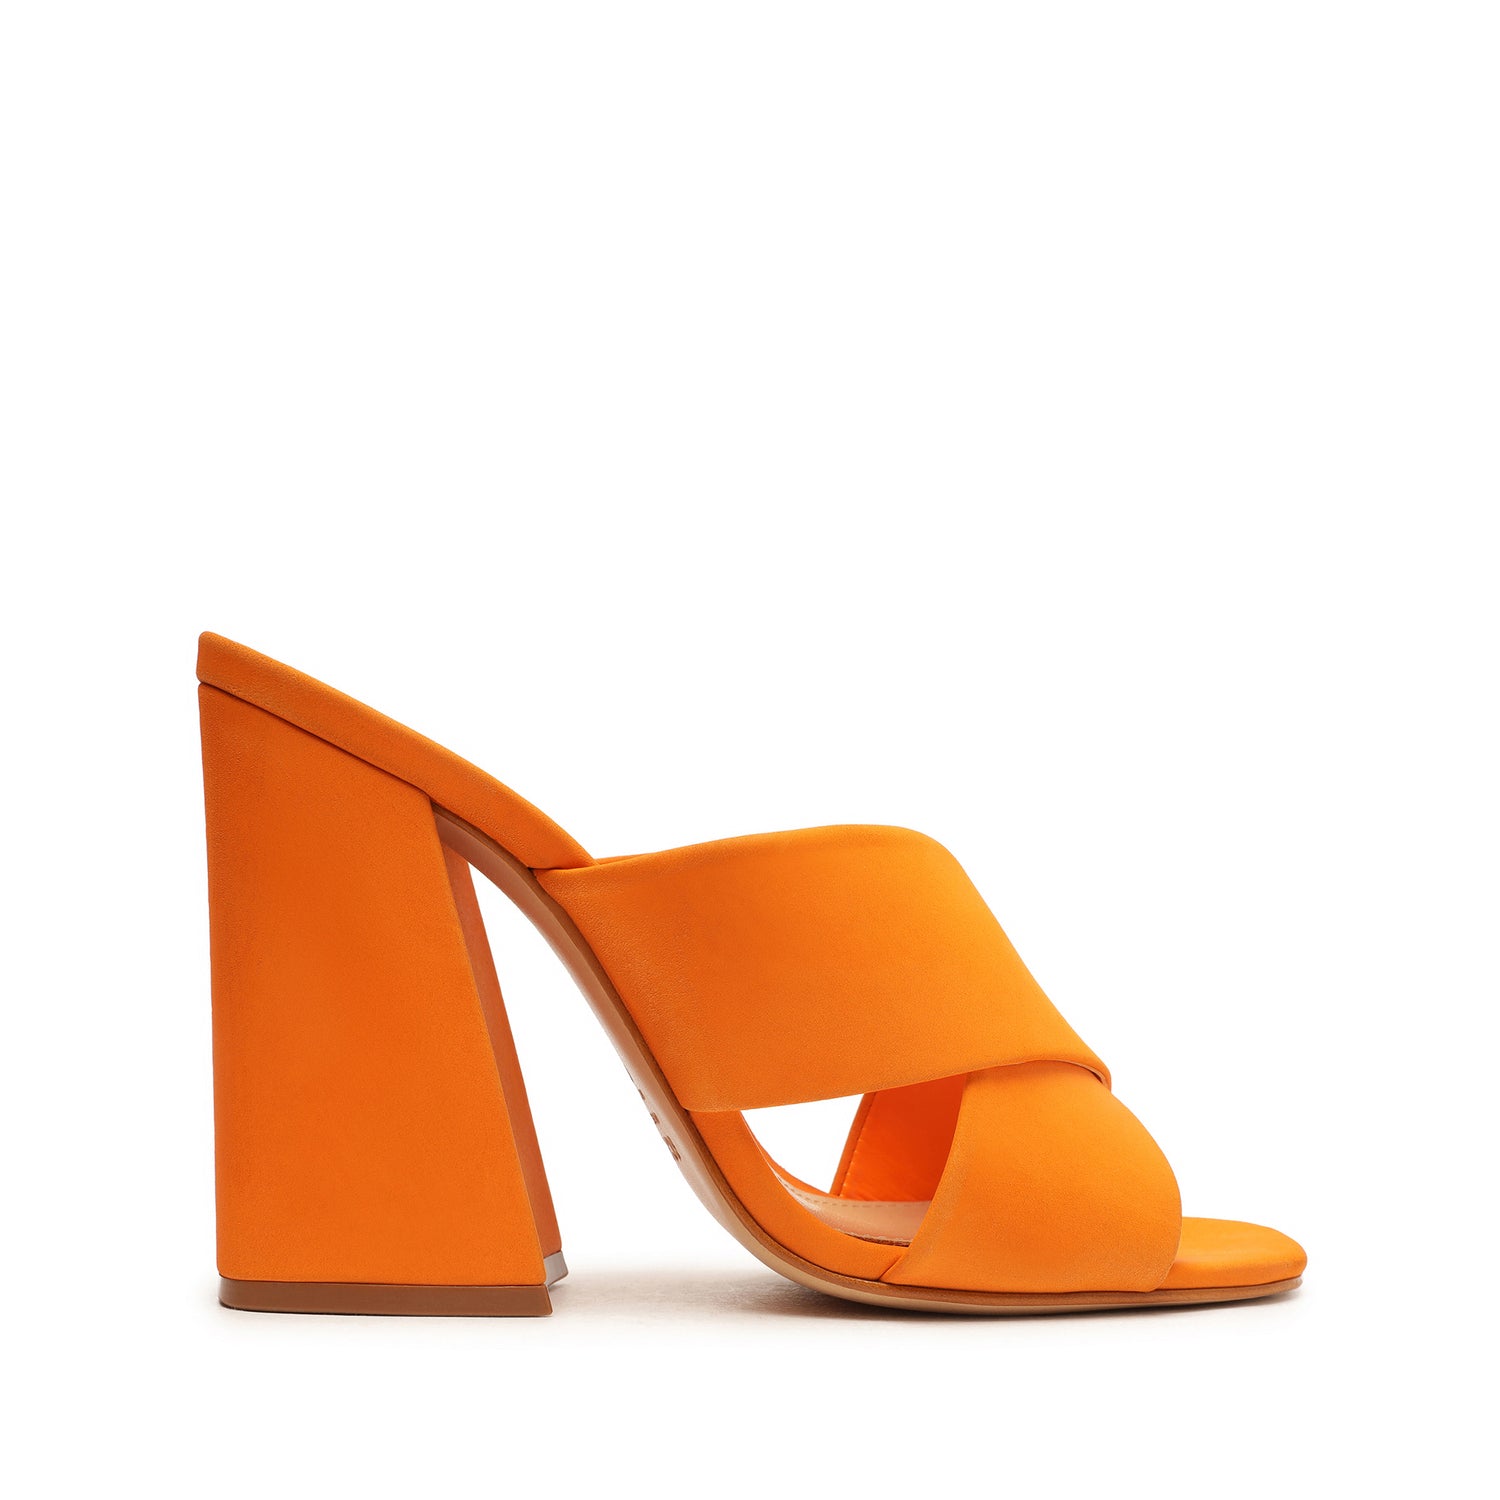 Callie Nubuck Sandal Sandals Resort 23 5 Bright Tangerine Nubuck - Schutz Shoes